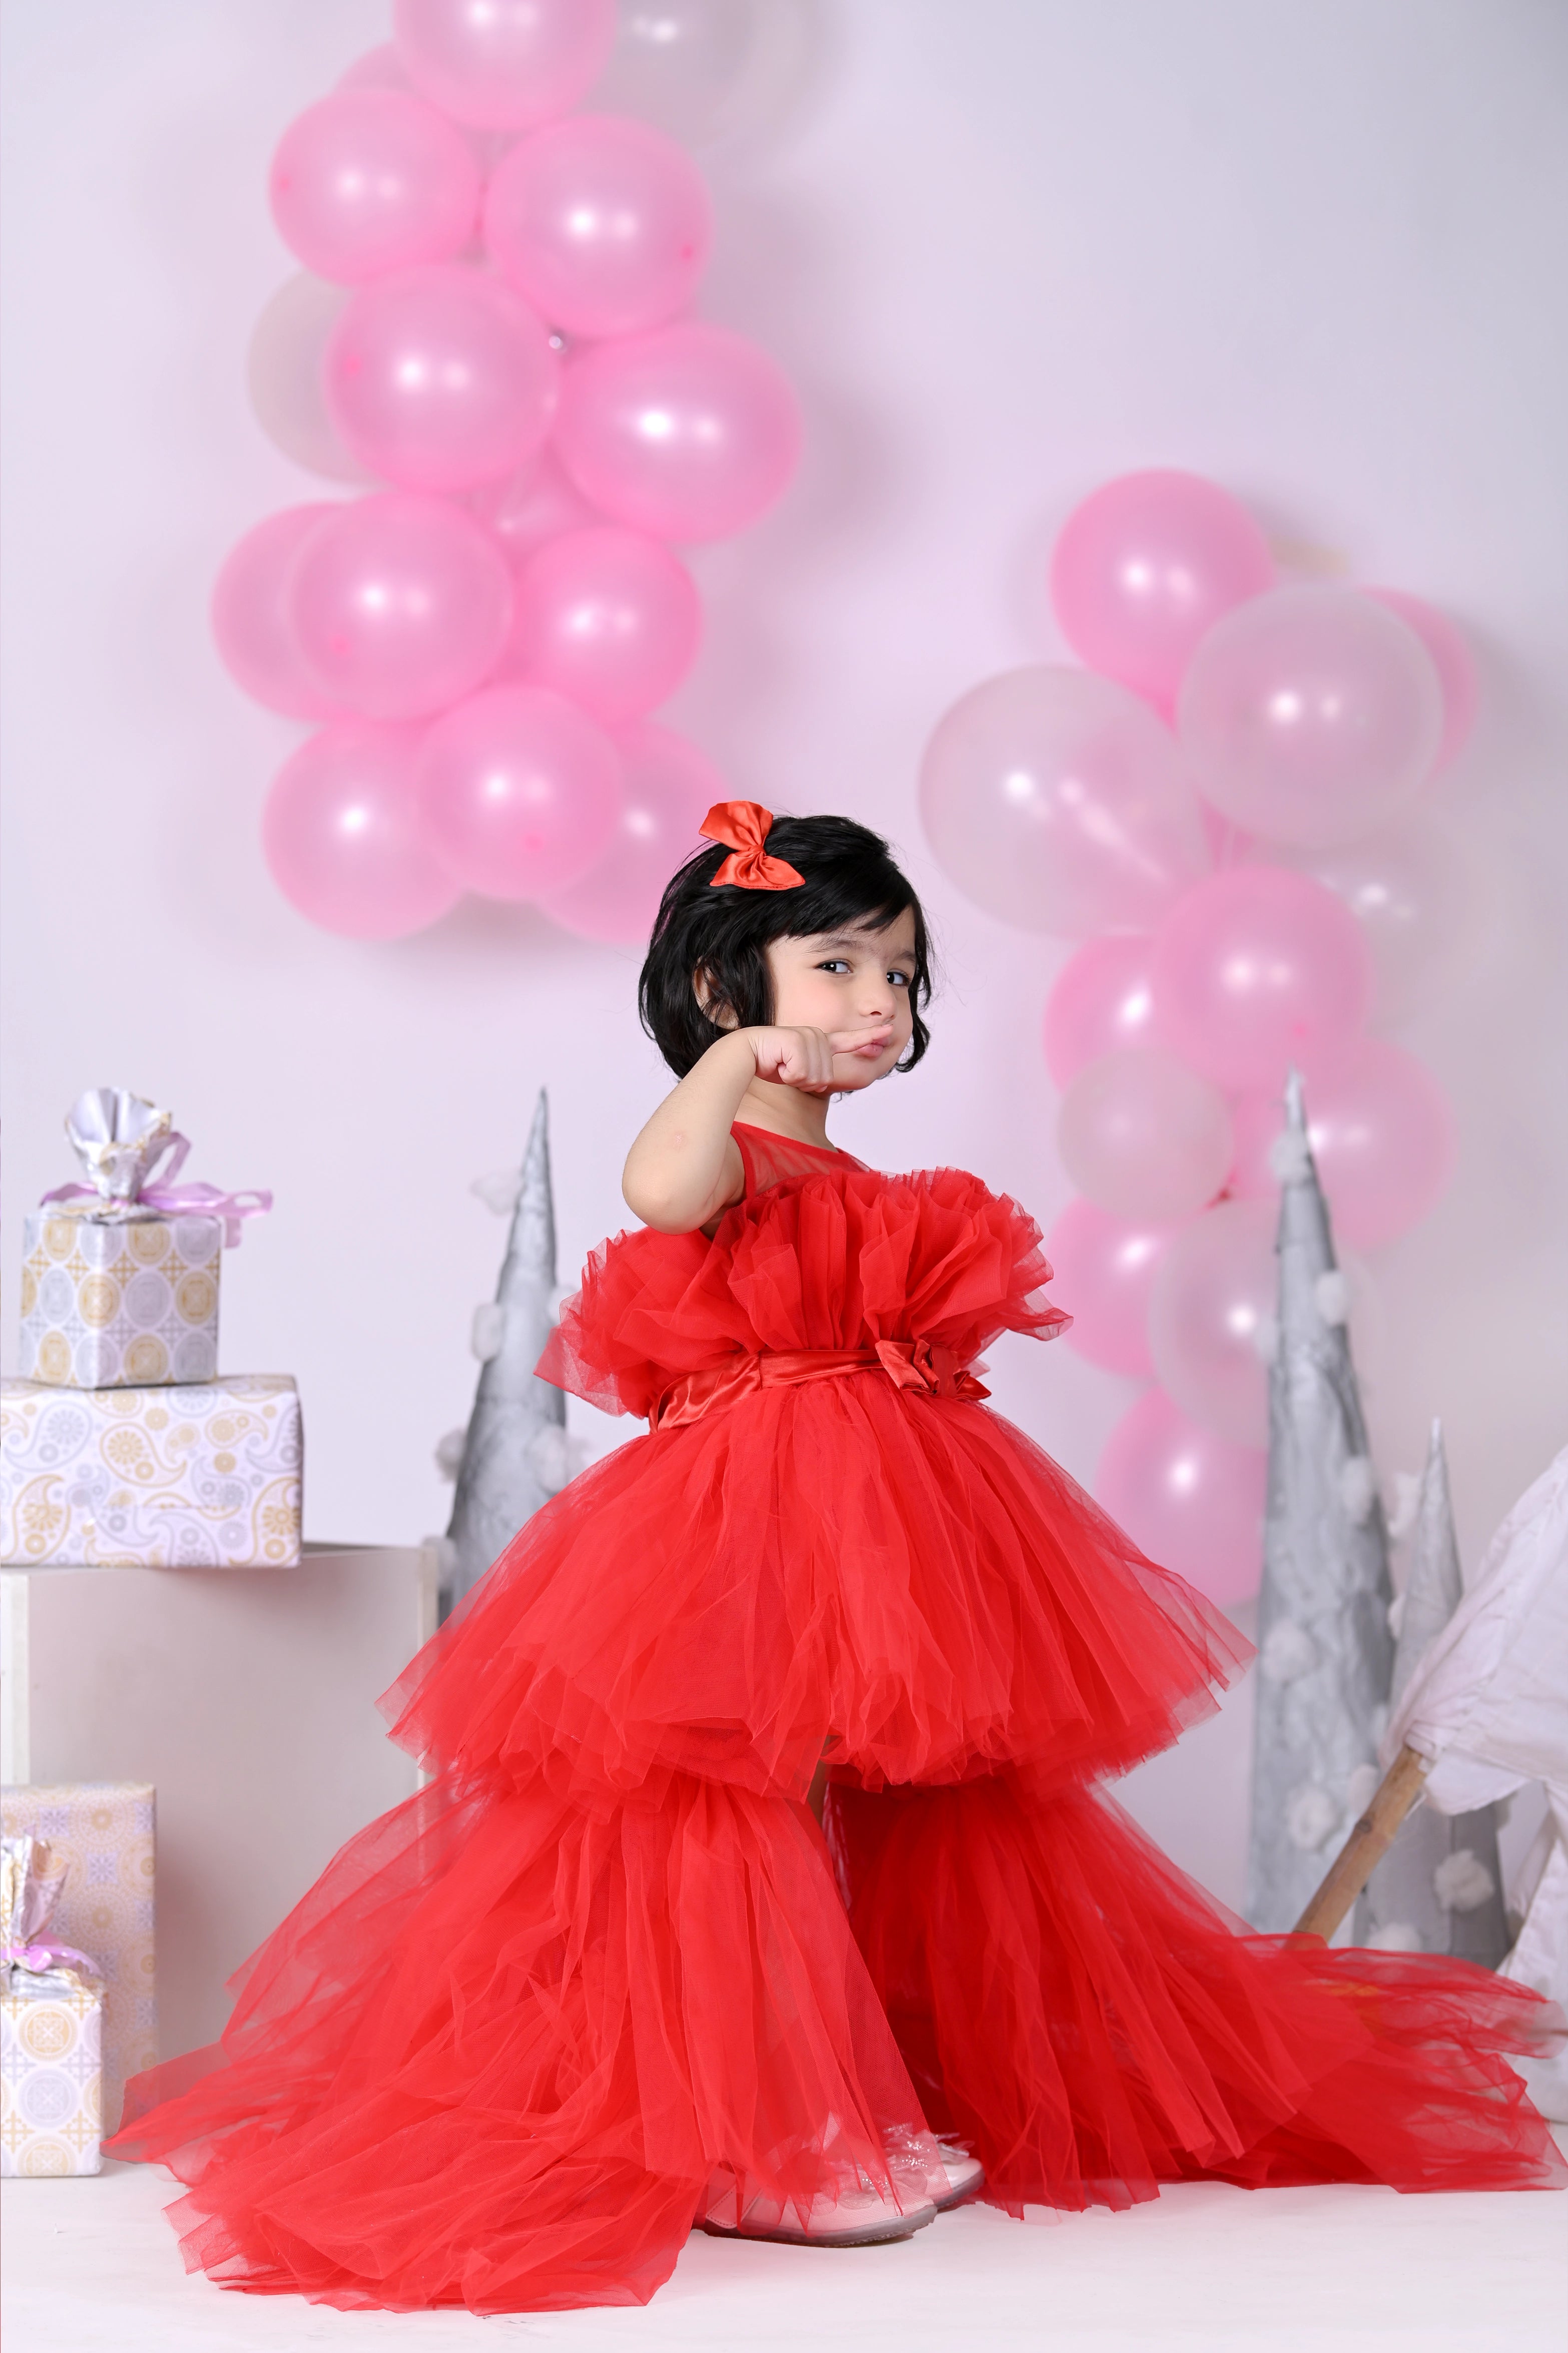 Cherry Candy Tail Dress